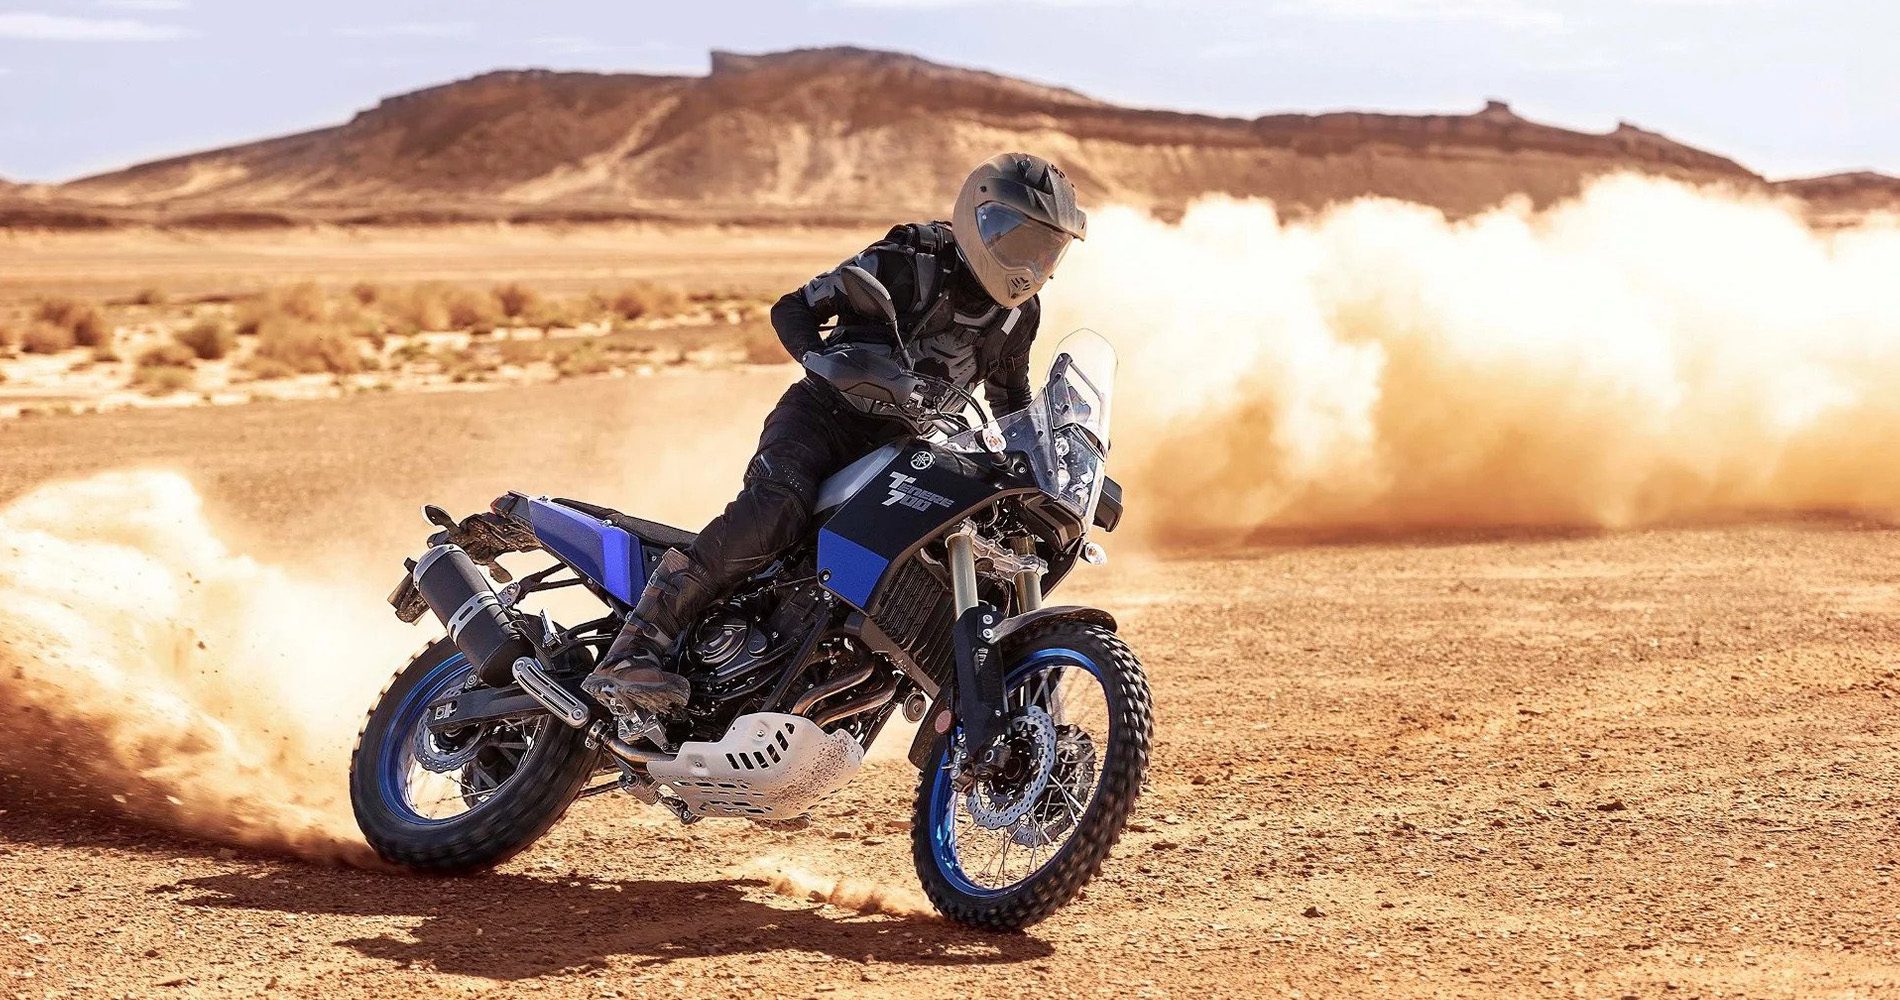 Motorcyclist on an adventure bike in the desert